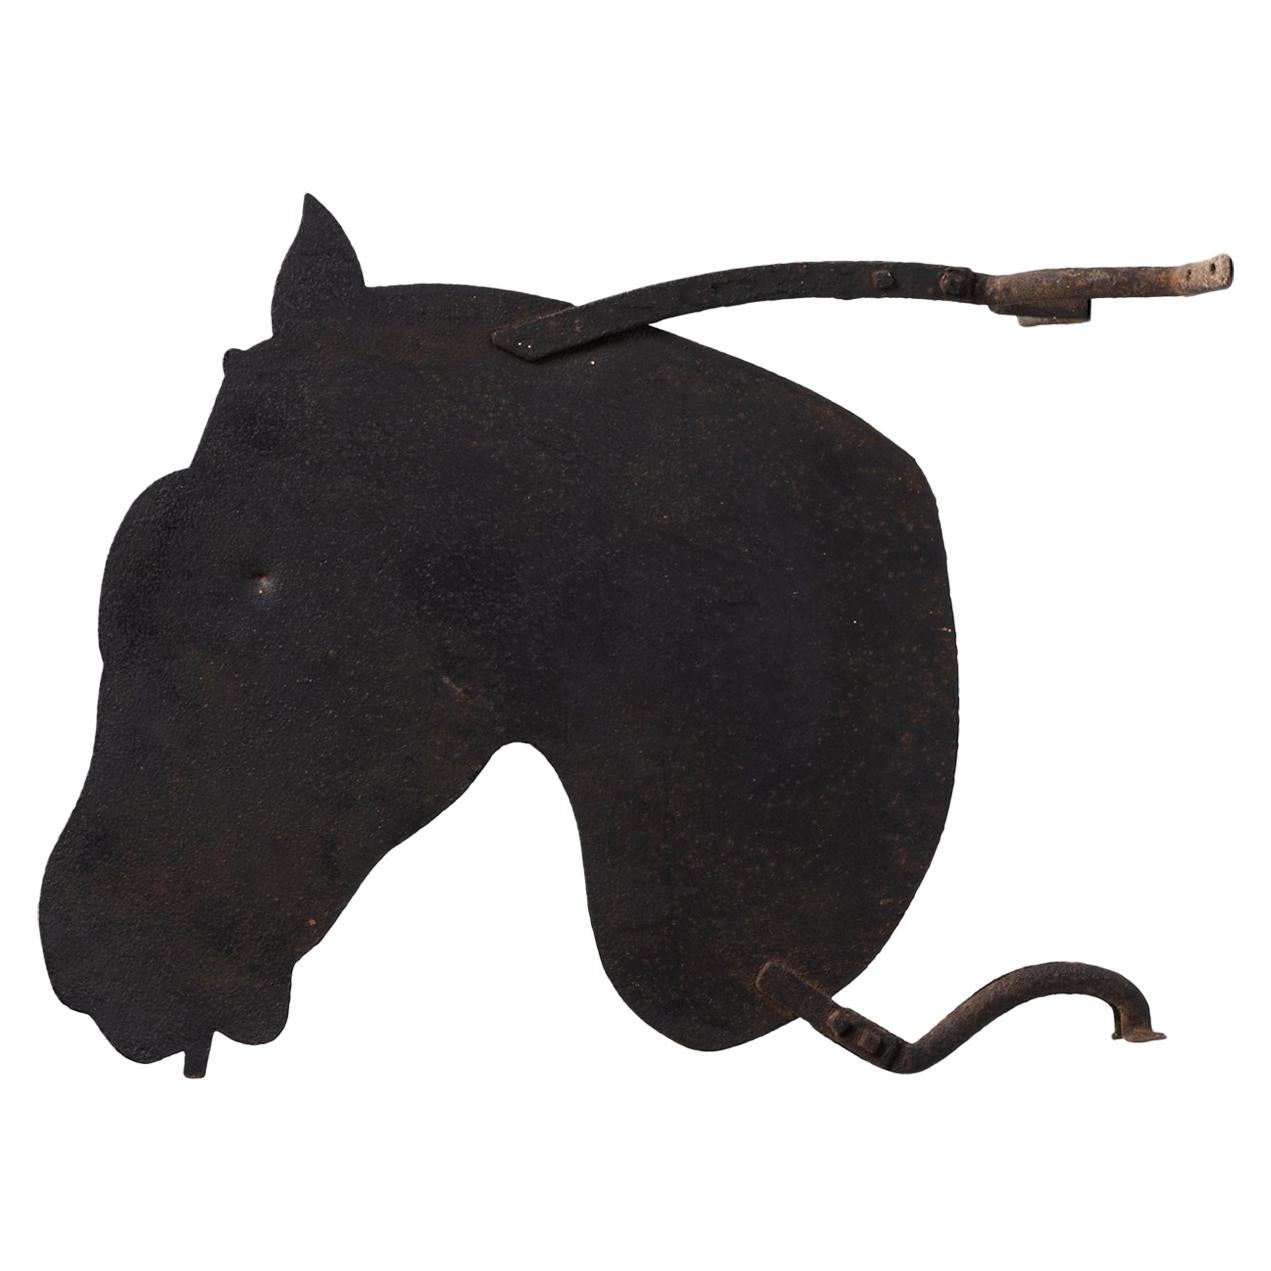 Iron Saddlers Horse Sign, circa 1890